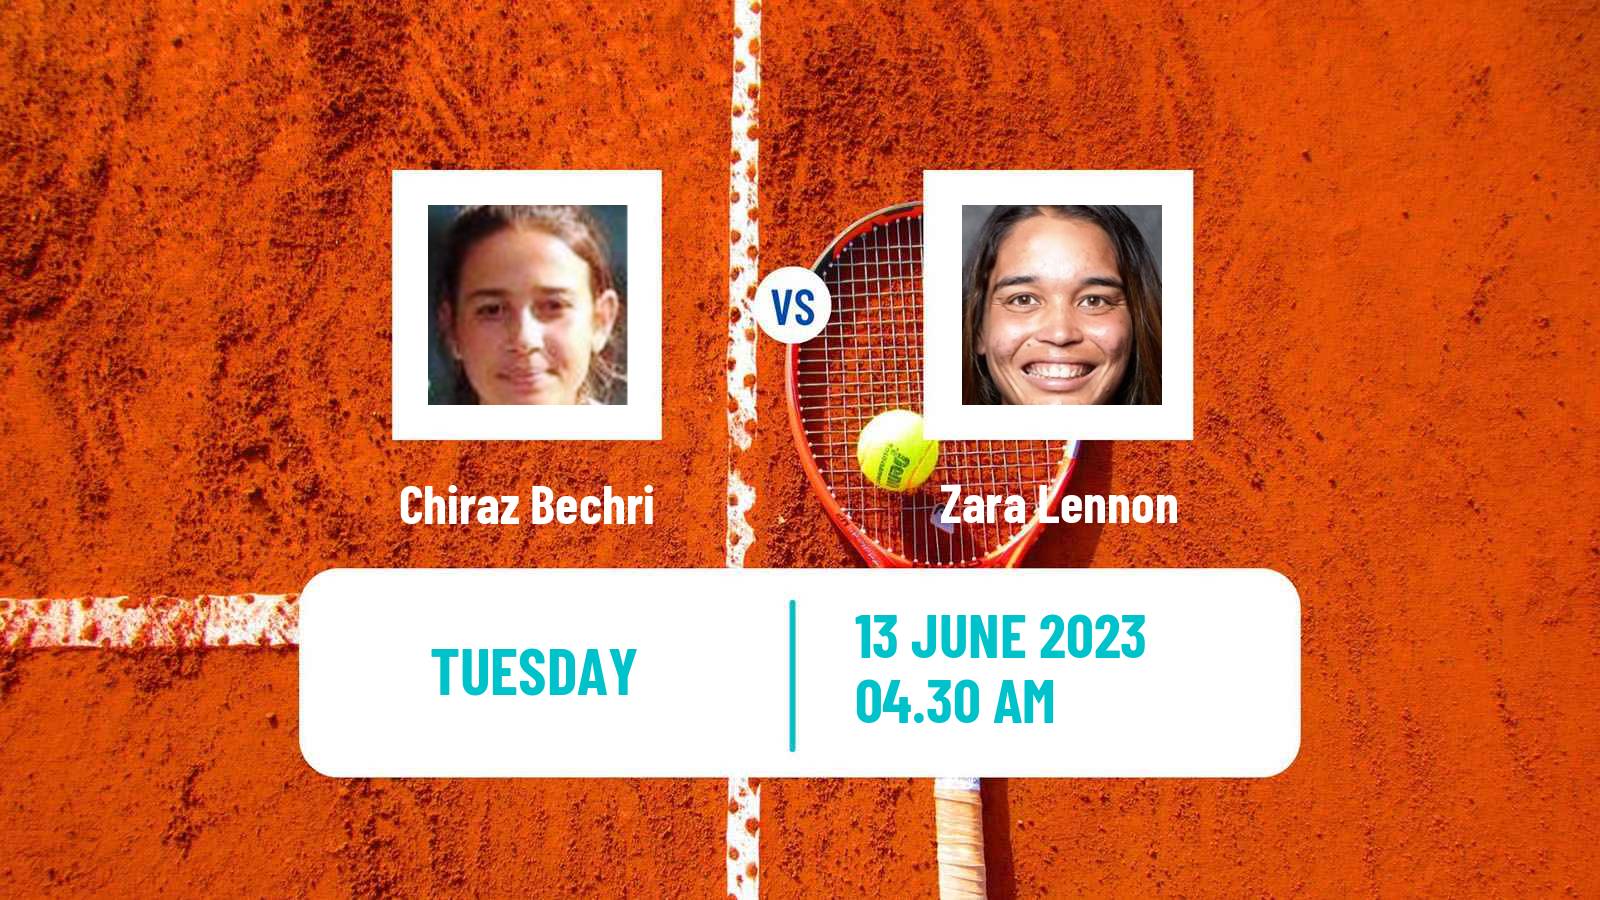 Tennis WTA Billie Jean King Cup Group III Chiraz Bechri - Zara Lennon